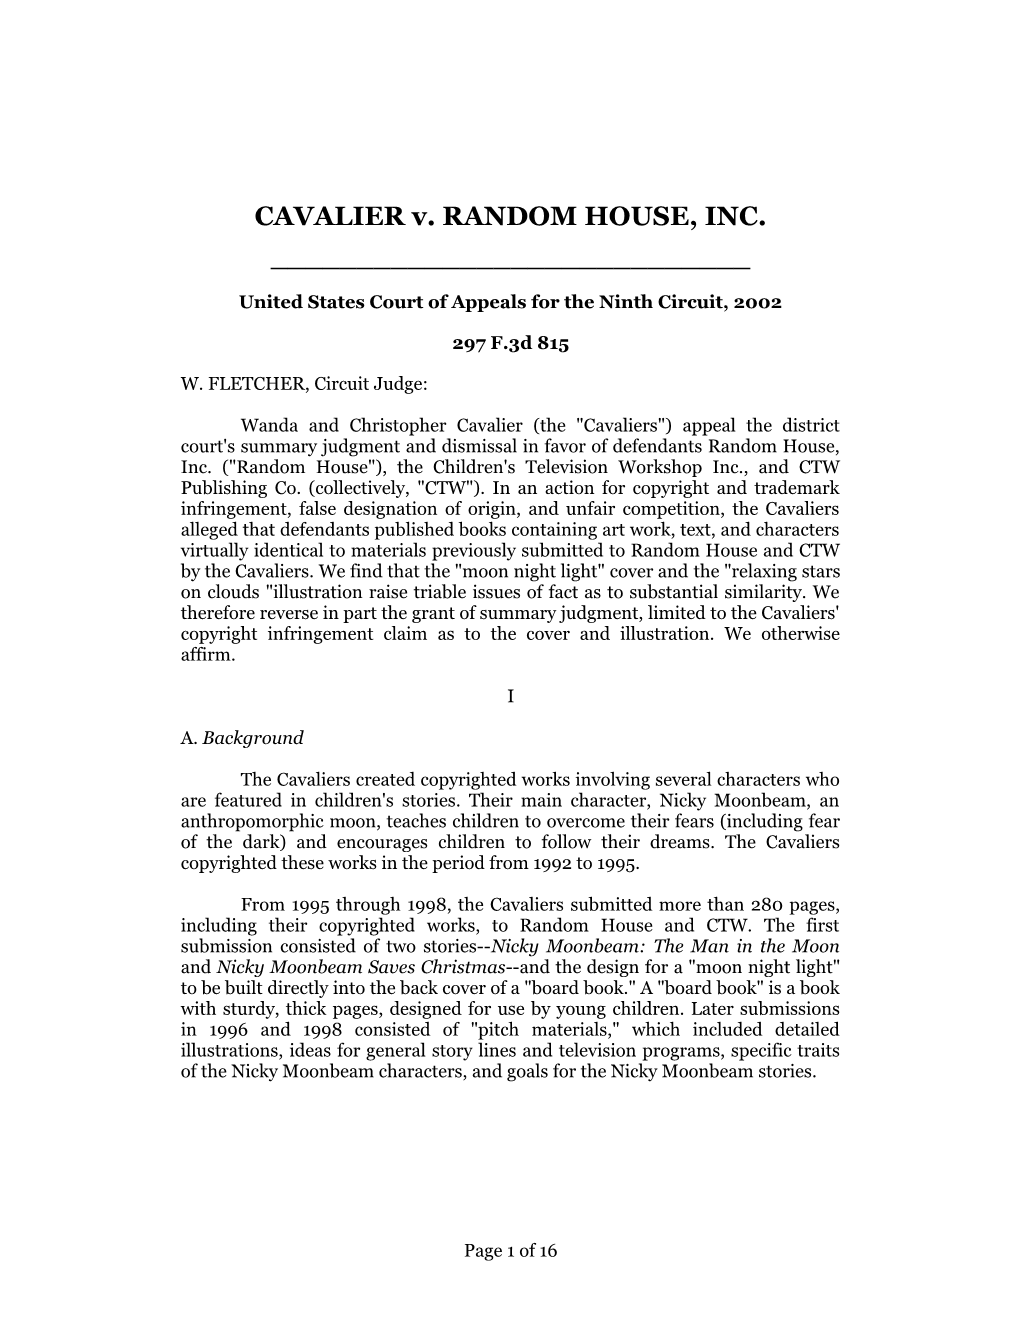 Cavalier V. Random House, Inc